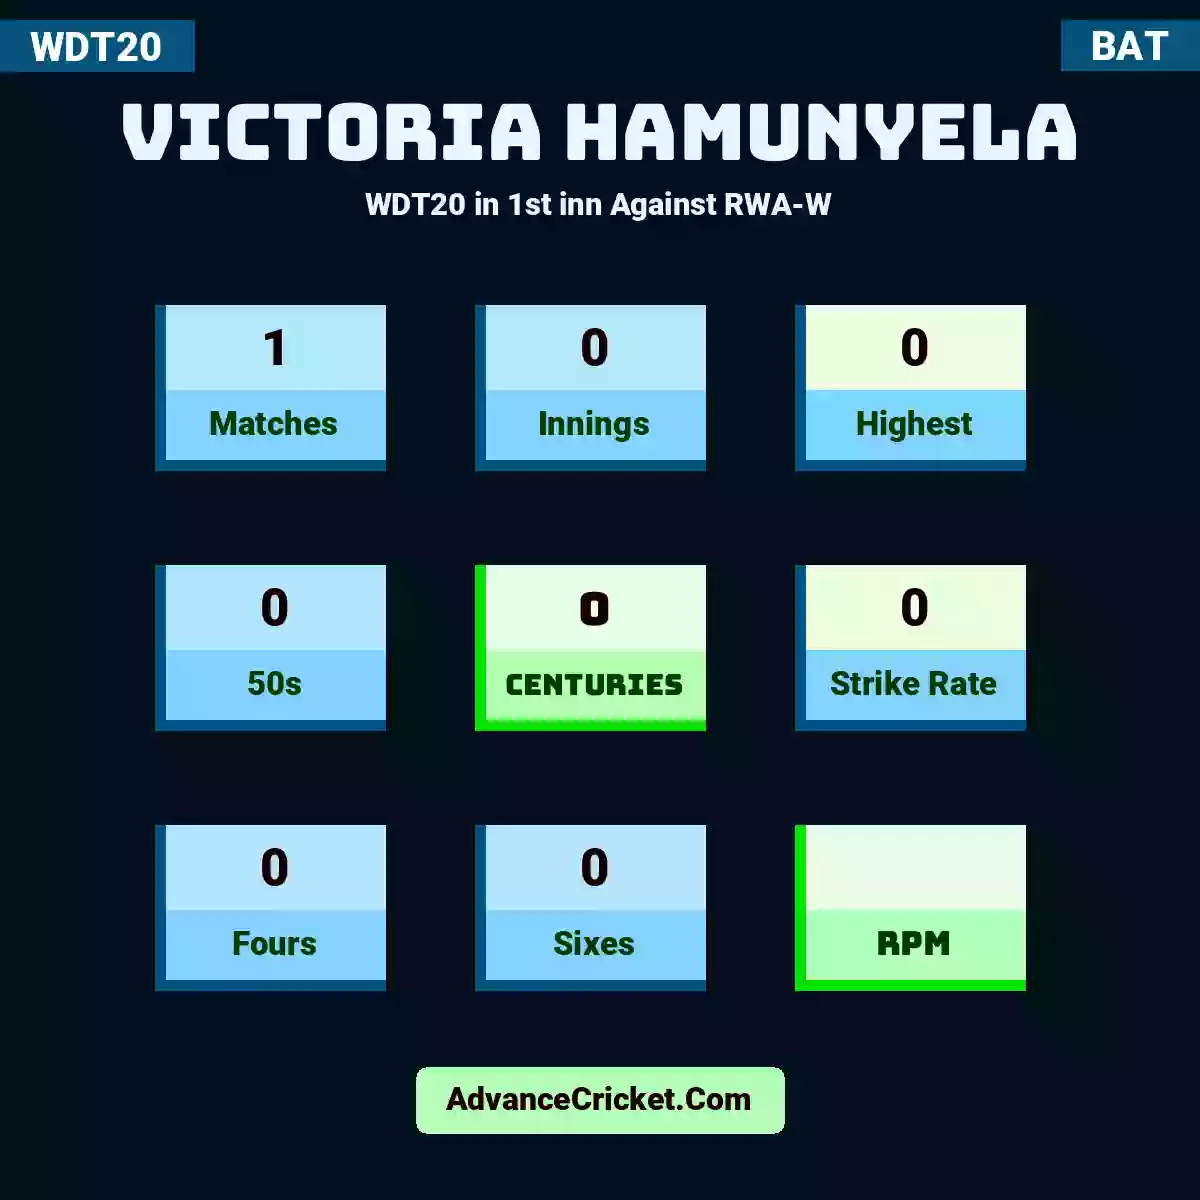 Victoria Hamunyela WDT20  in 1st inn Against RWA-W, Victoria Hamunyela played 1 matches, scored 0 runs as highest, 0 half-centuries, and 0 centuries, with a strike rate of 0. V.Hamunyela hit 0 fours and 0 sixes.